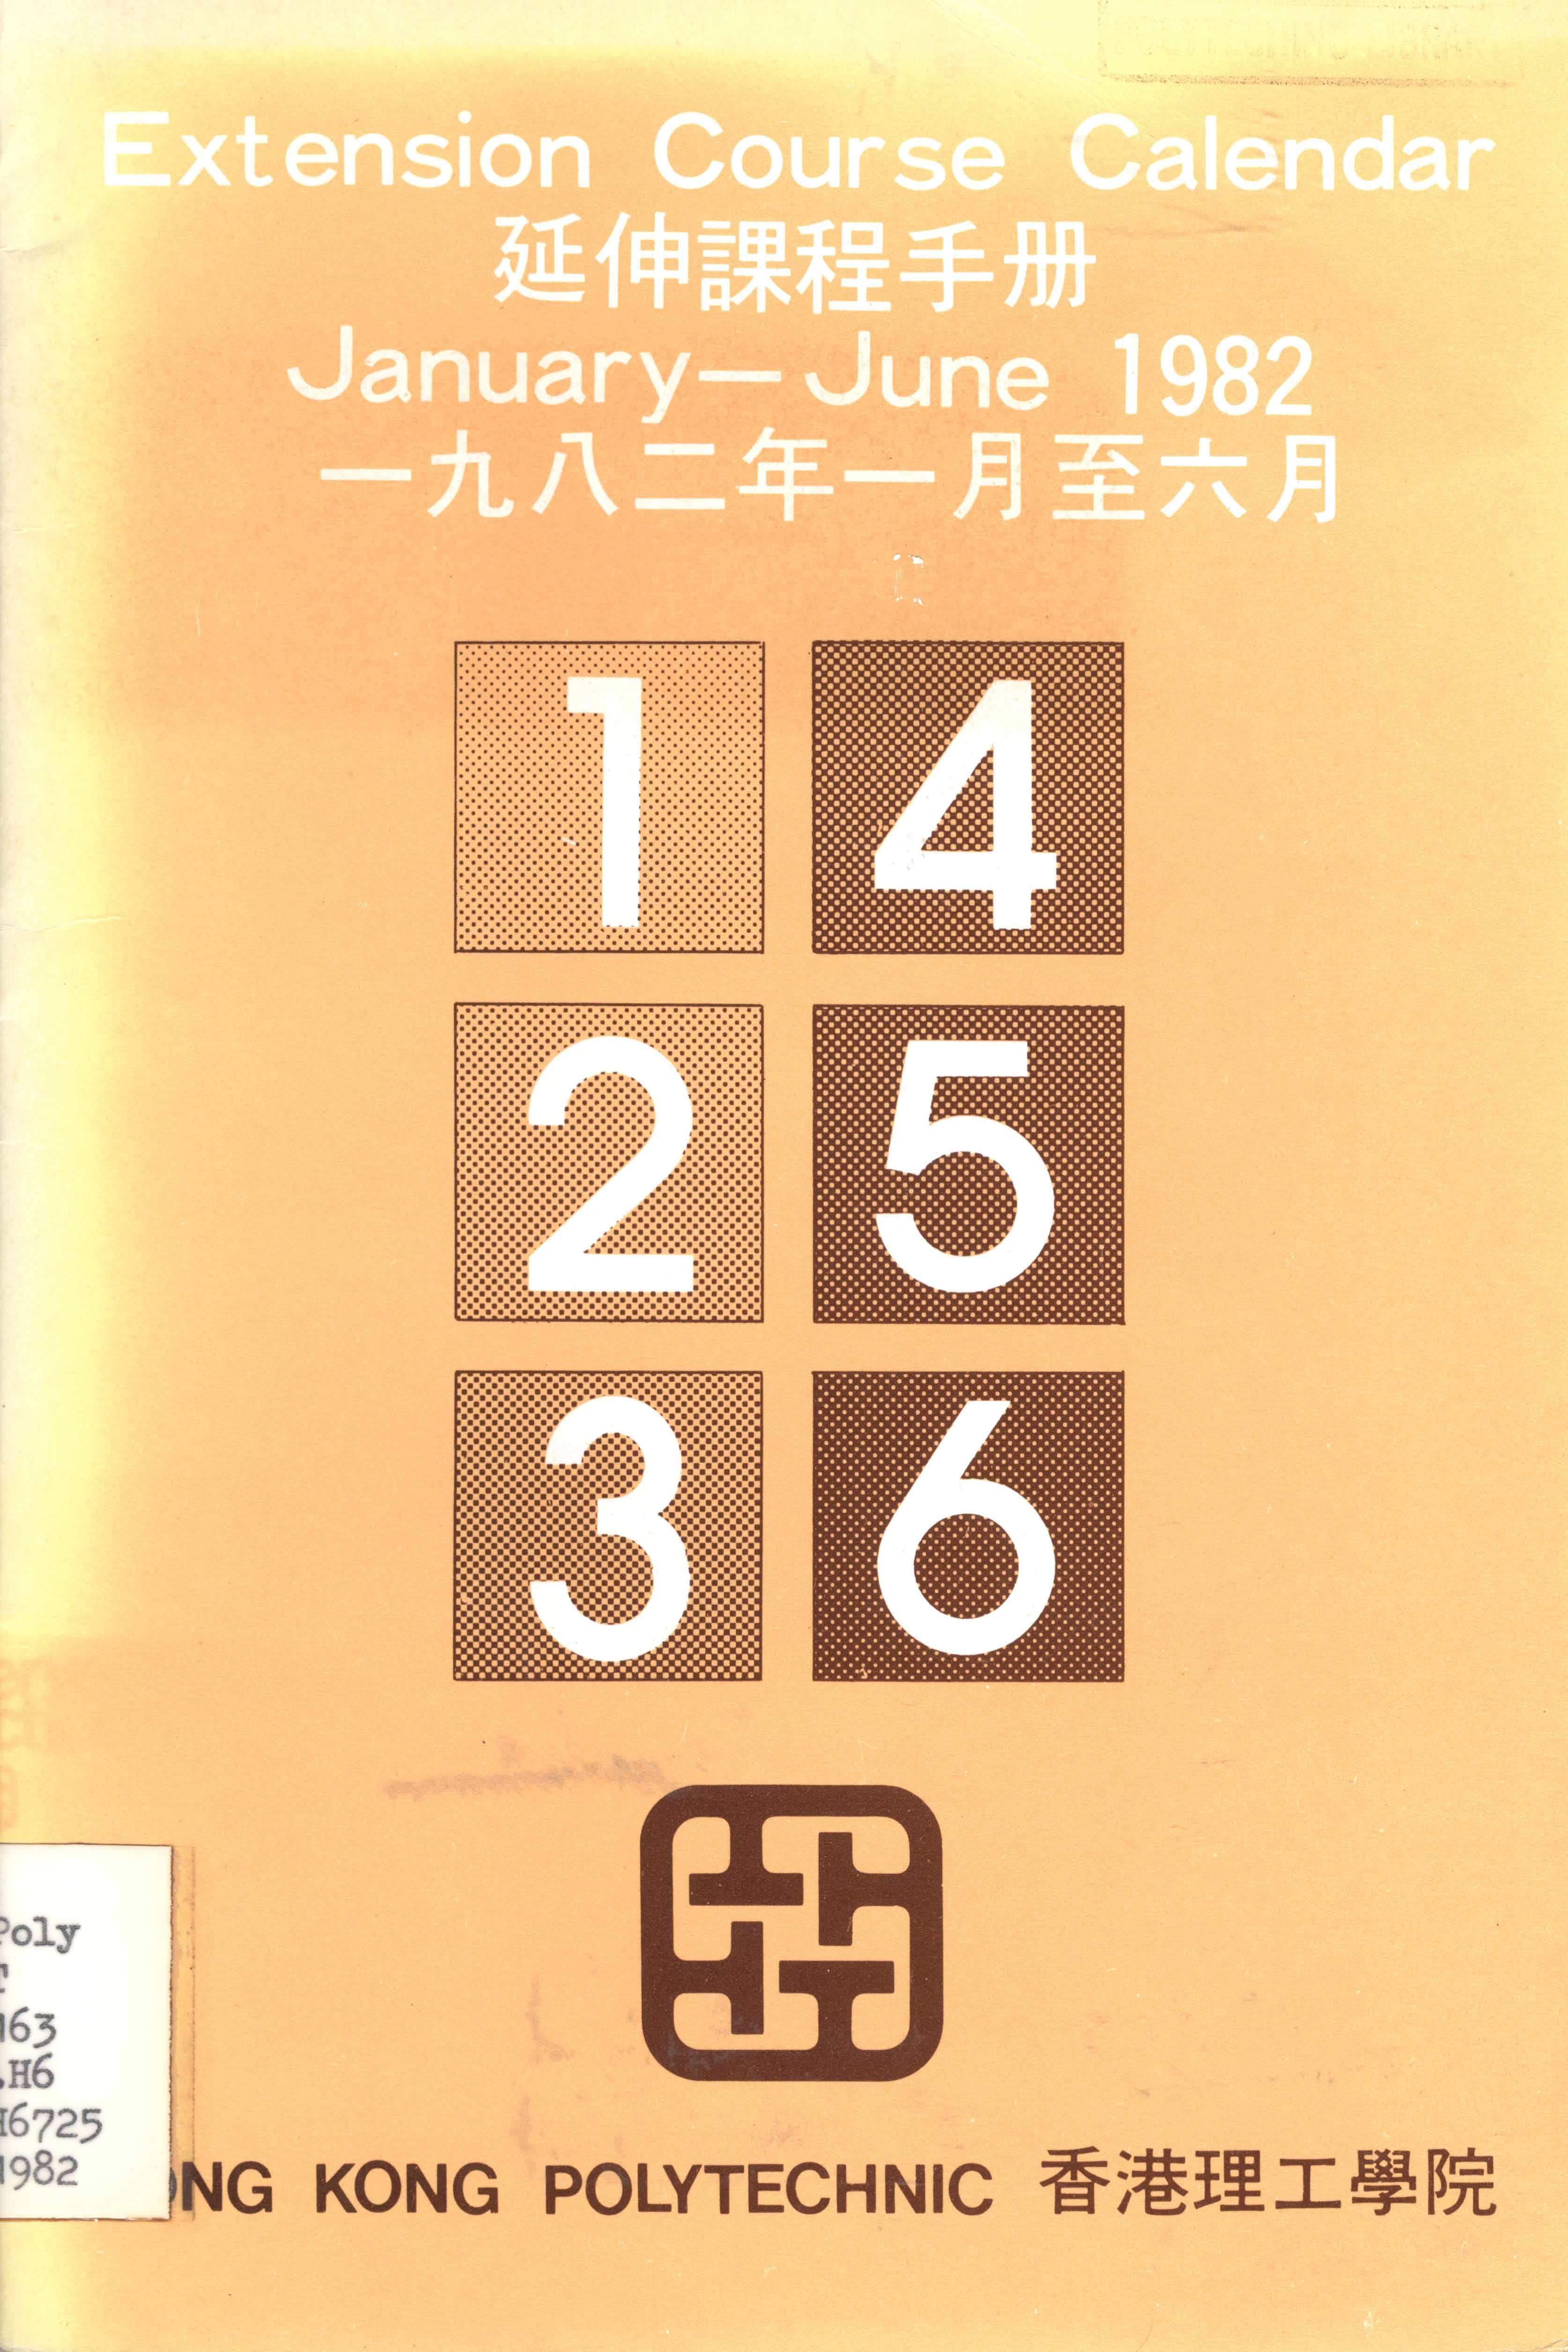 Extension course calendar [Jan - June 1982]